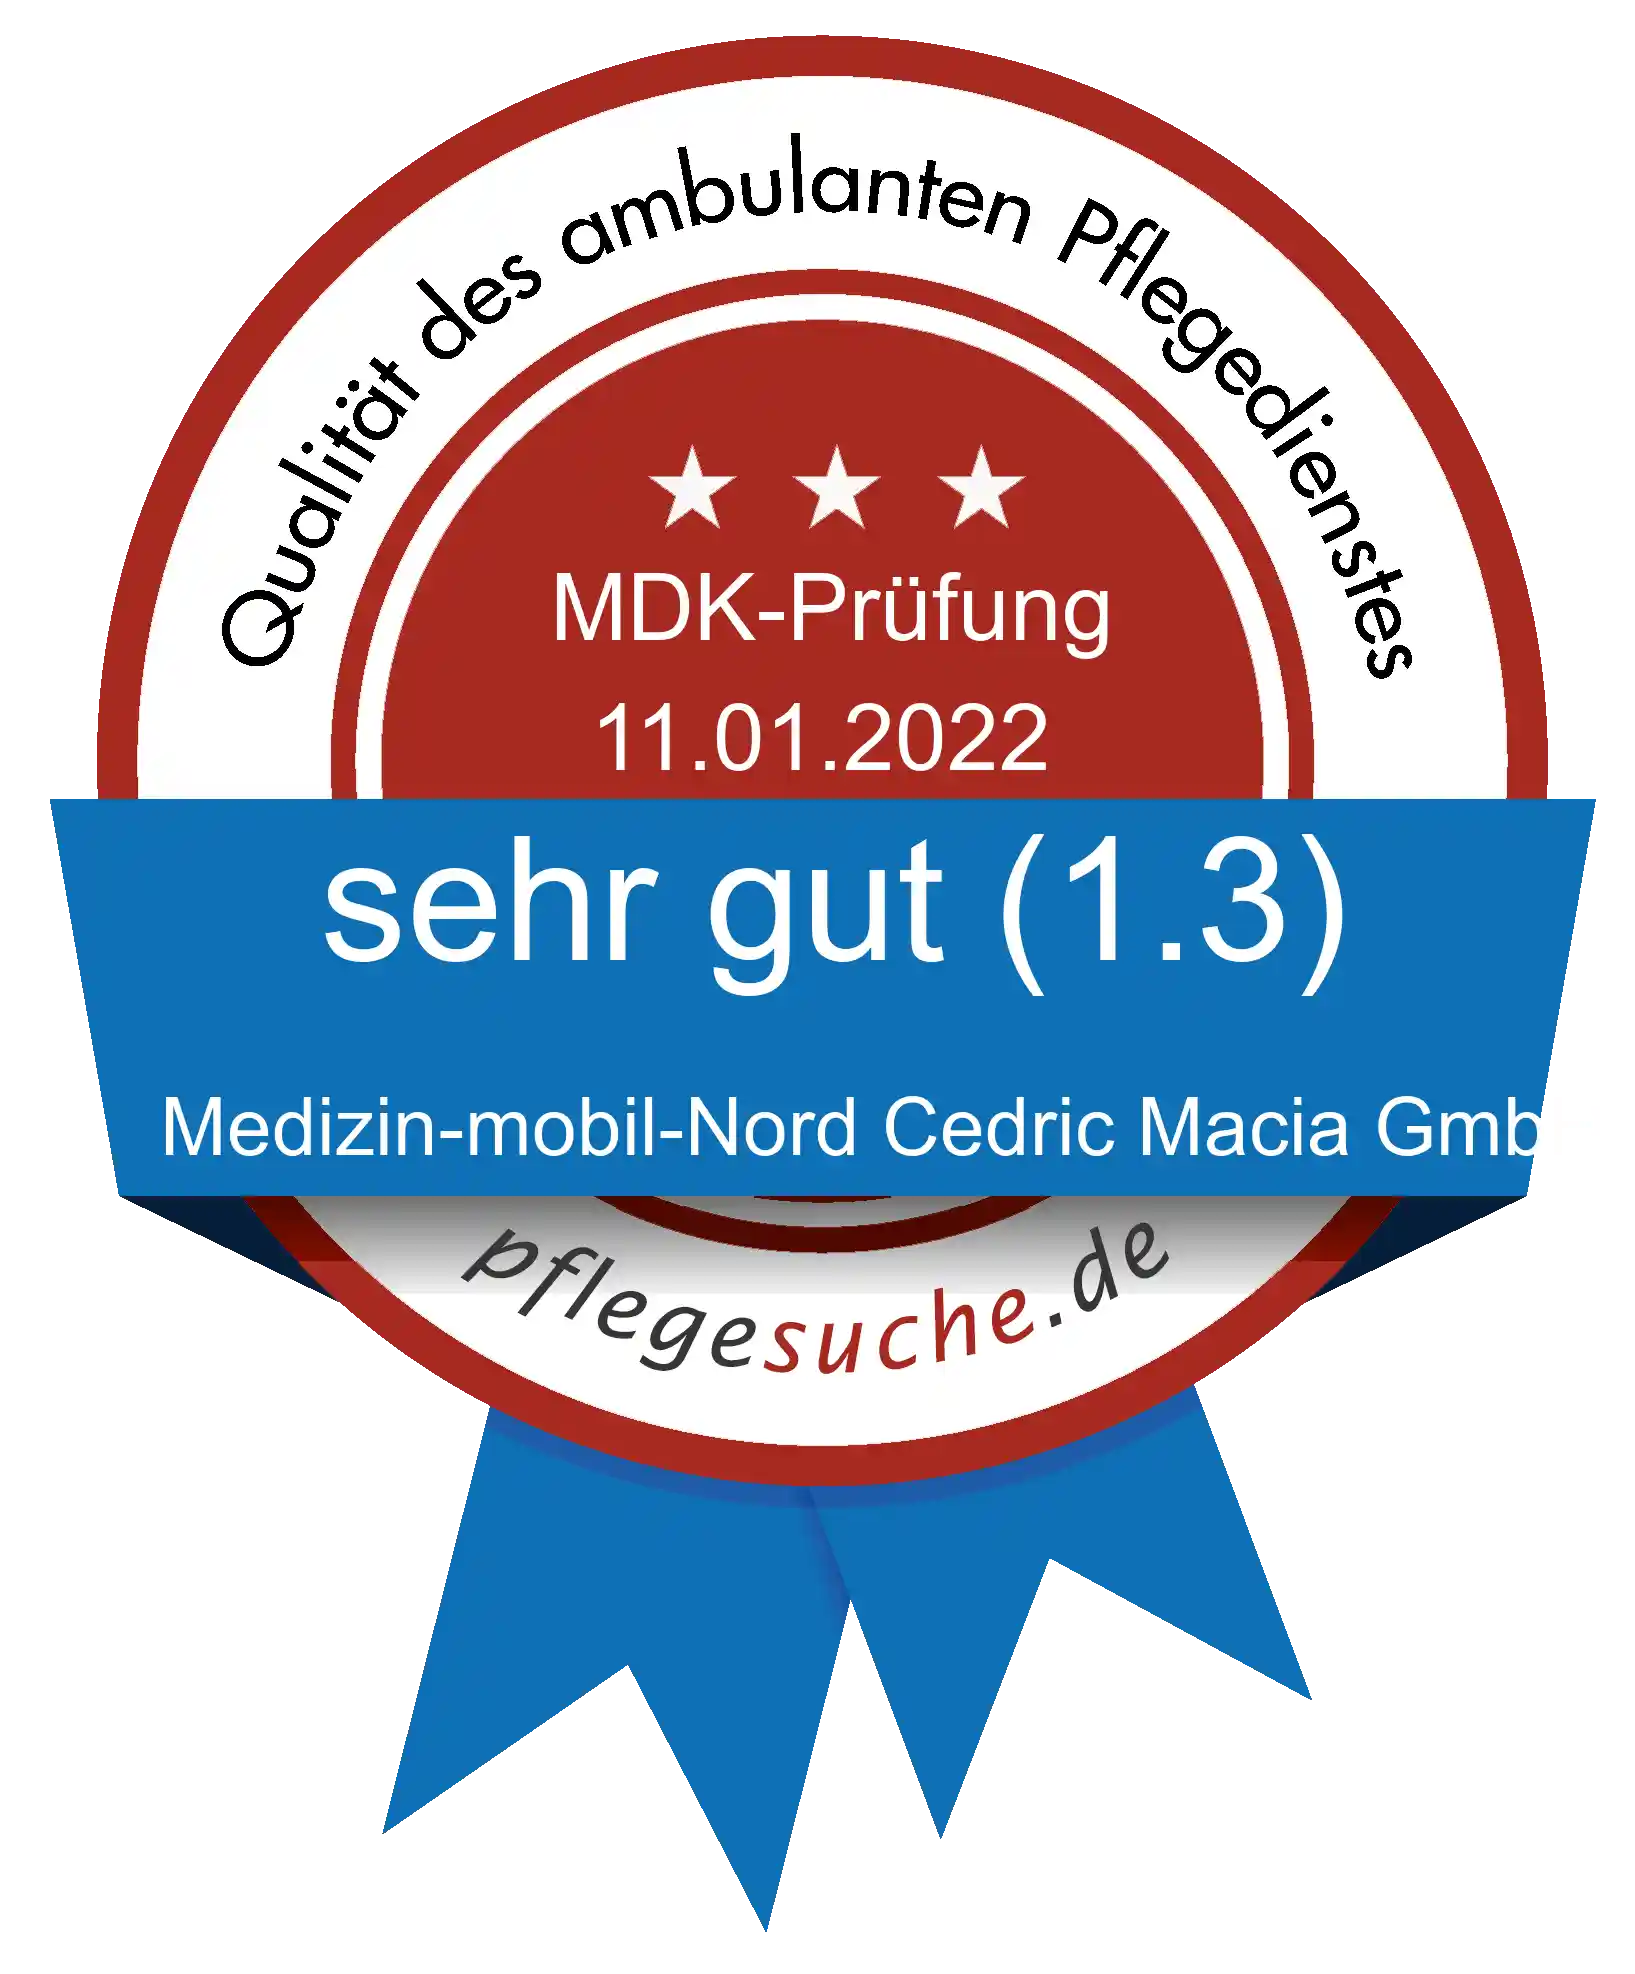 Siegel Benotung: Medizin-mobil-Nord Cedric Macia GmbH